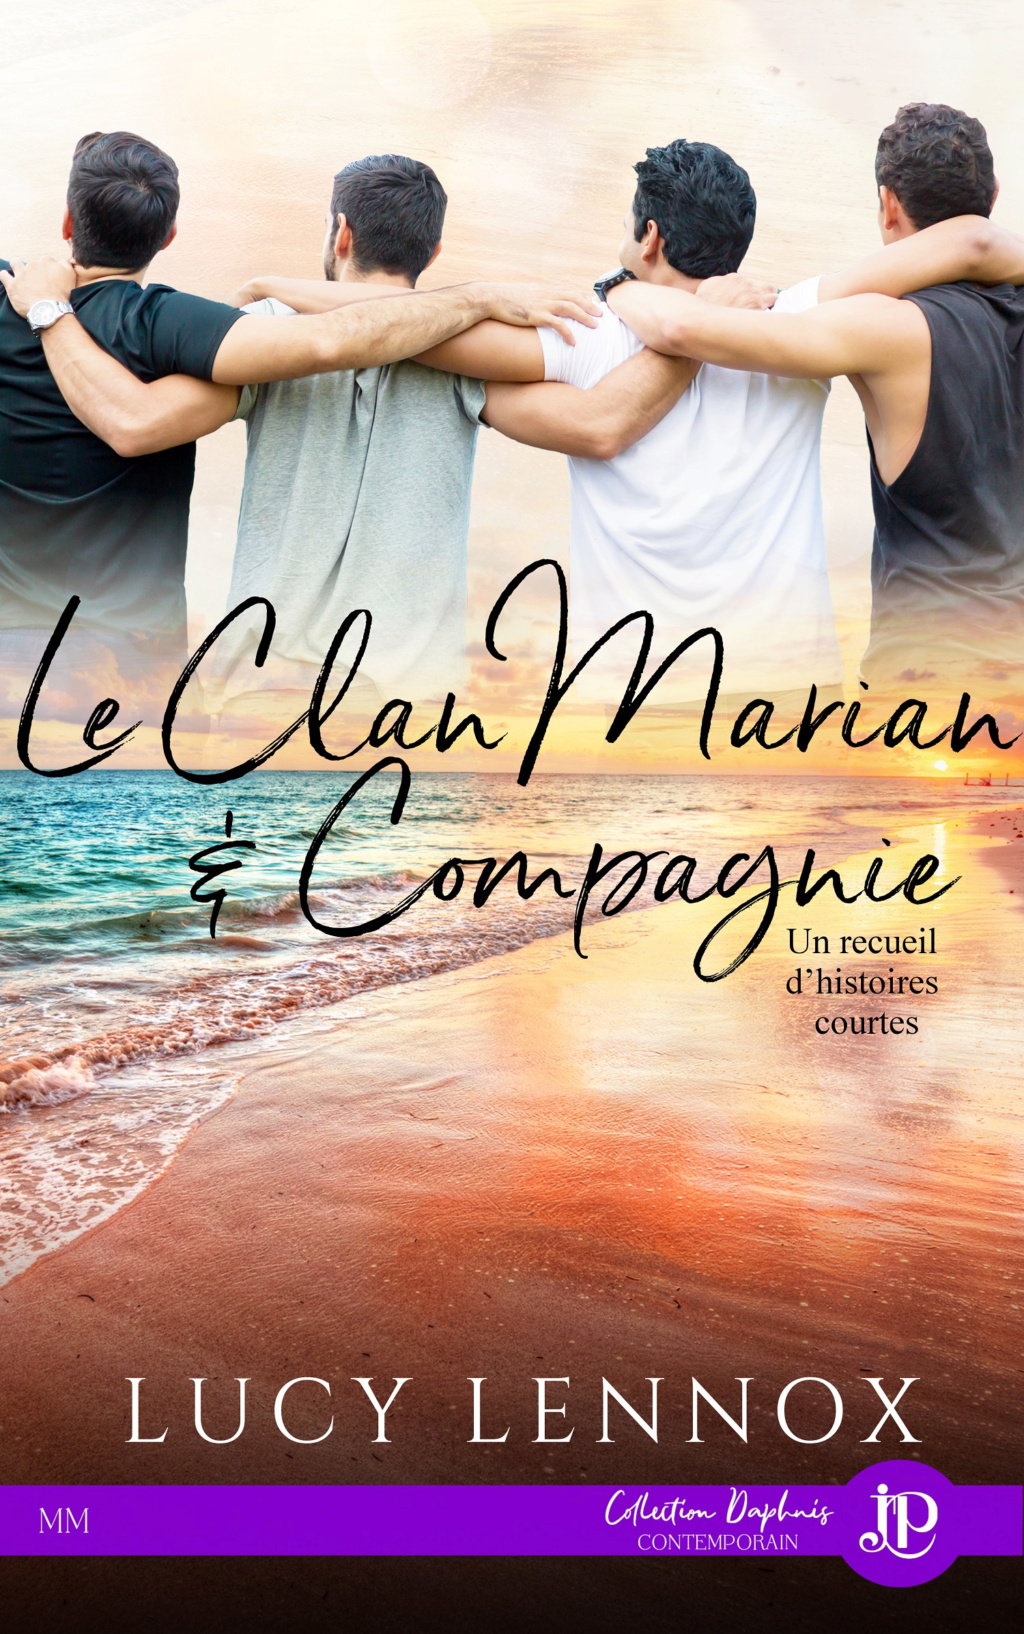 Le clan Marian : Le clan Marian & Compagnie de Lucy Lennox & Sloane Kennedy  2dc91710